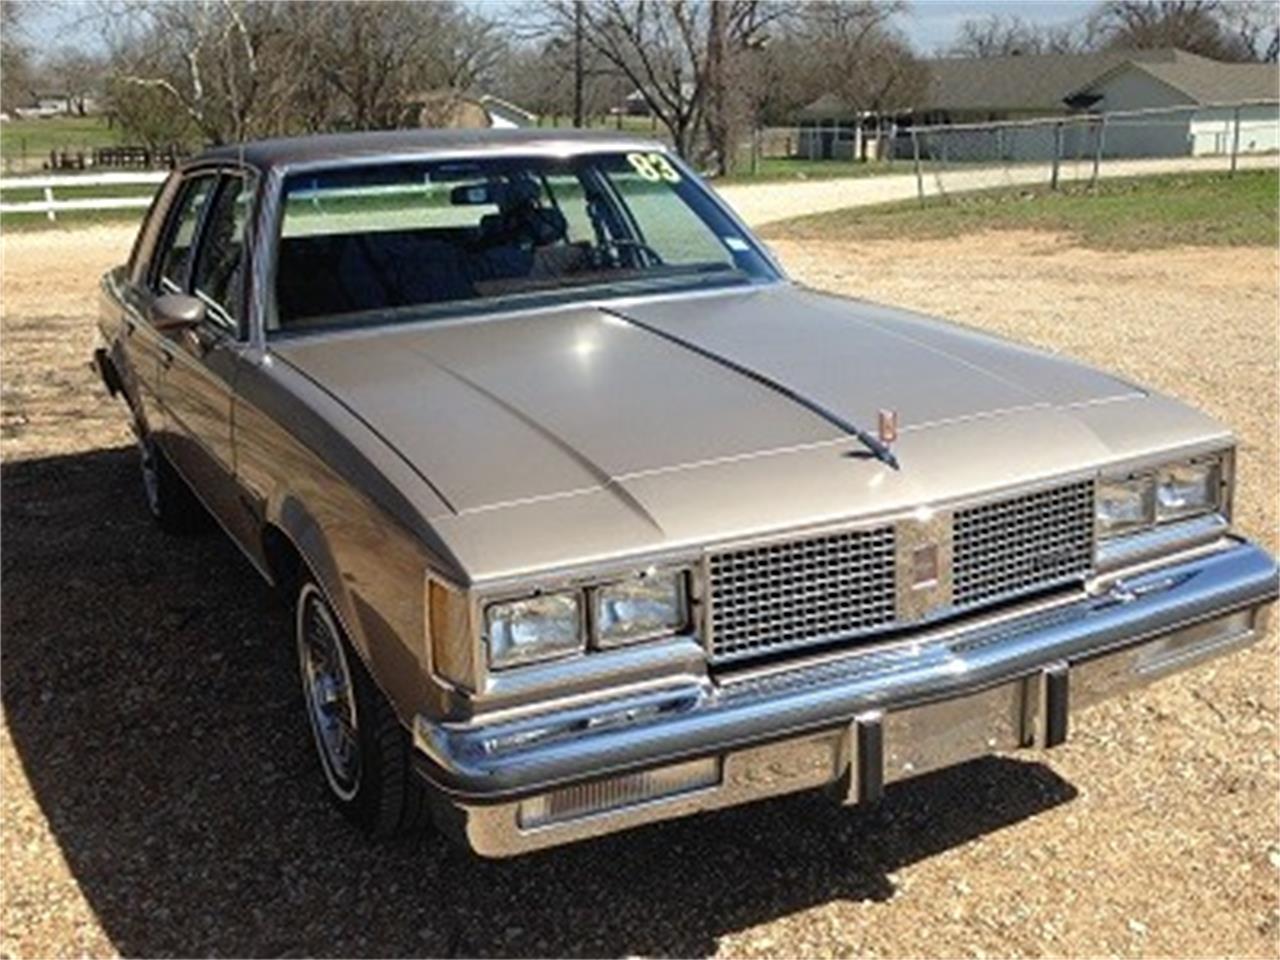 For Sale: 1983 Oldsmobile Cutlass Supreme in Robinson, Texas.